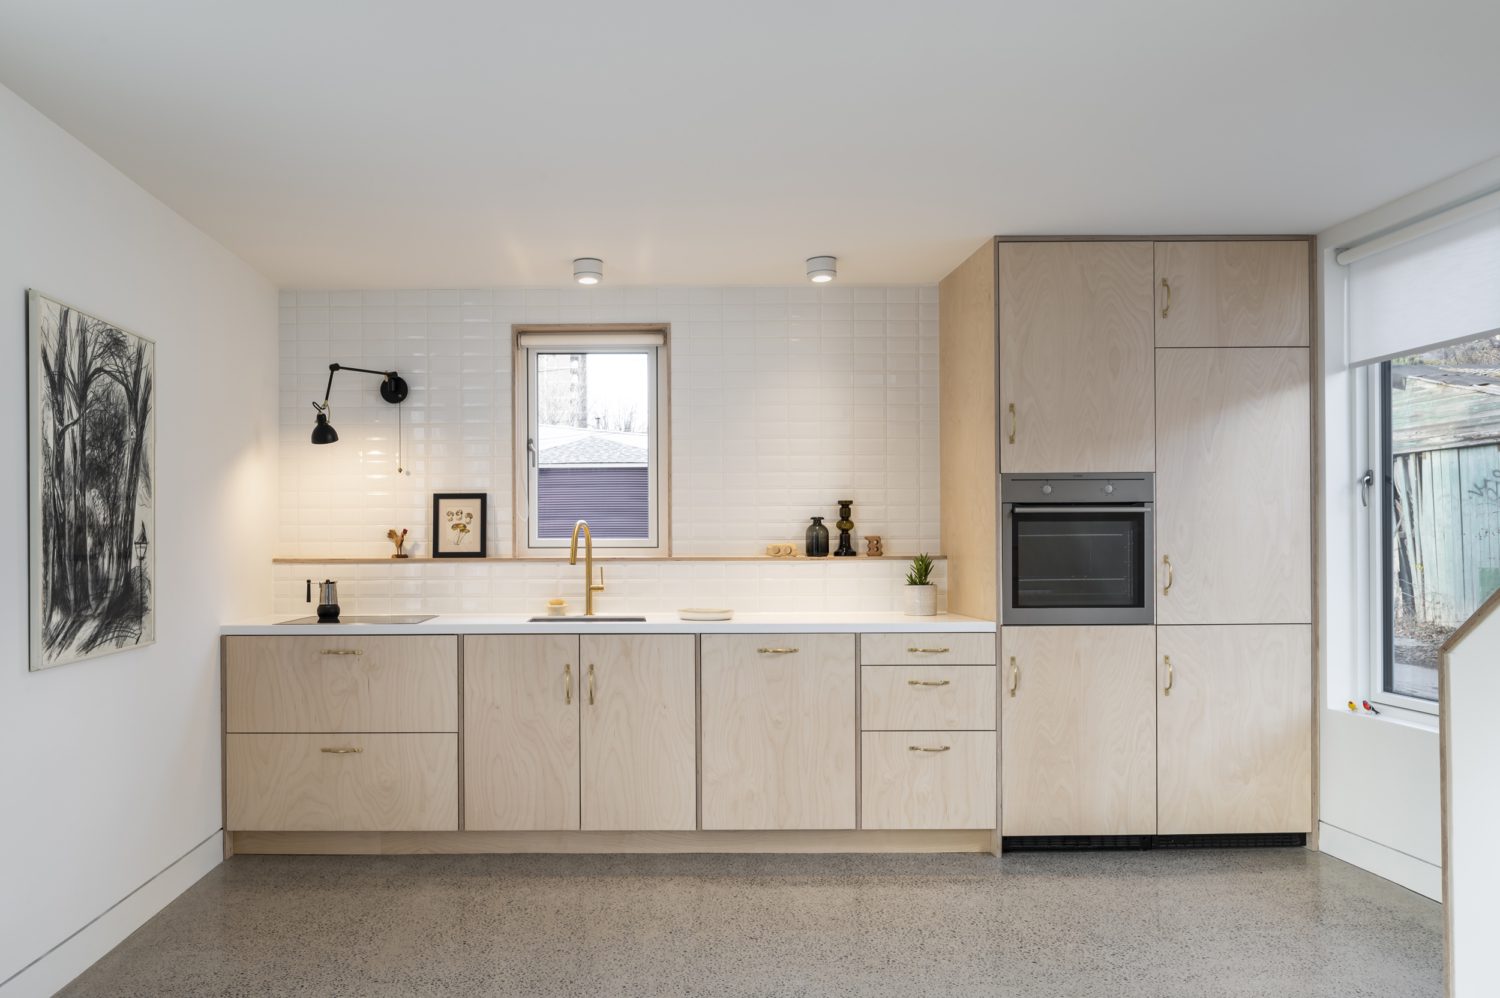 Parkdale, Toronto laneway house modern kitchen renovation with white countertops